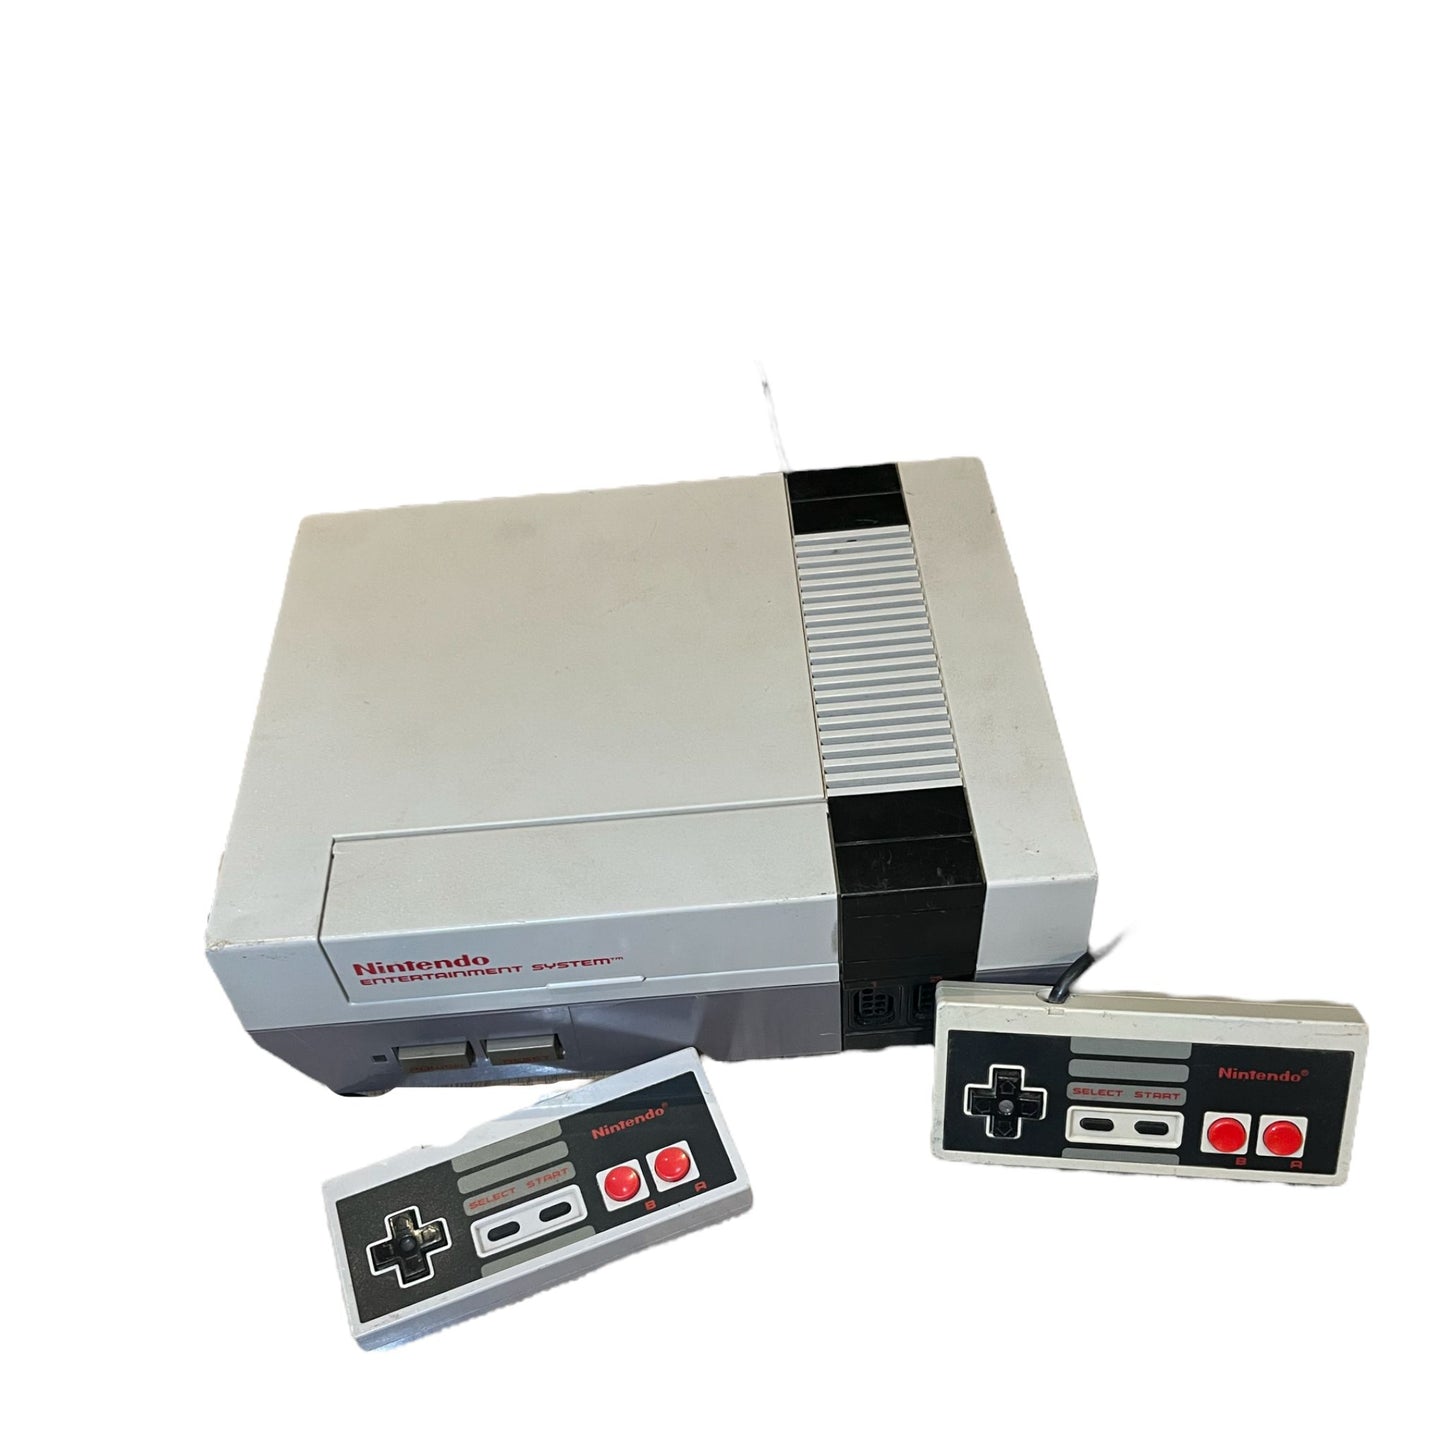 Nintendo Entertainmet System Console + 2 Controller's (NES)